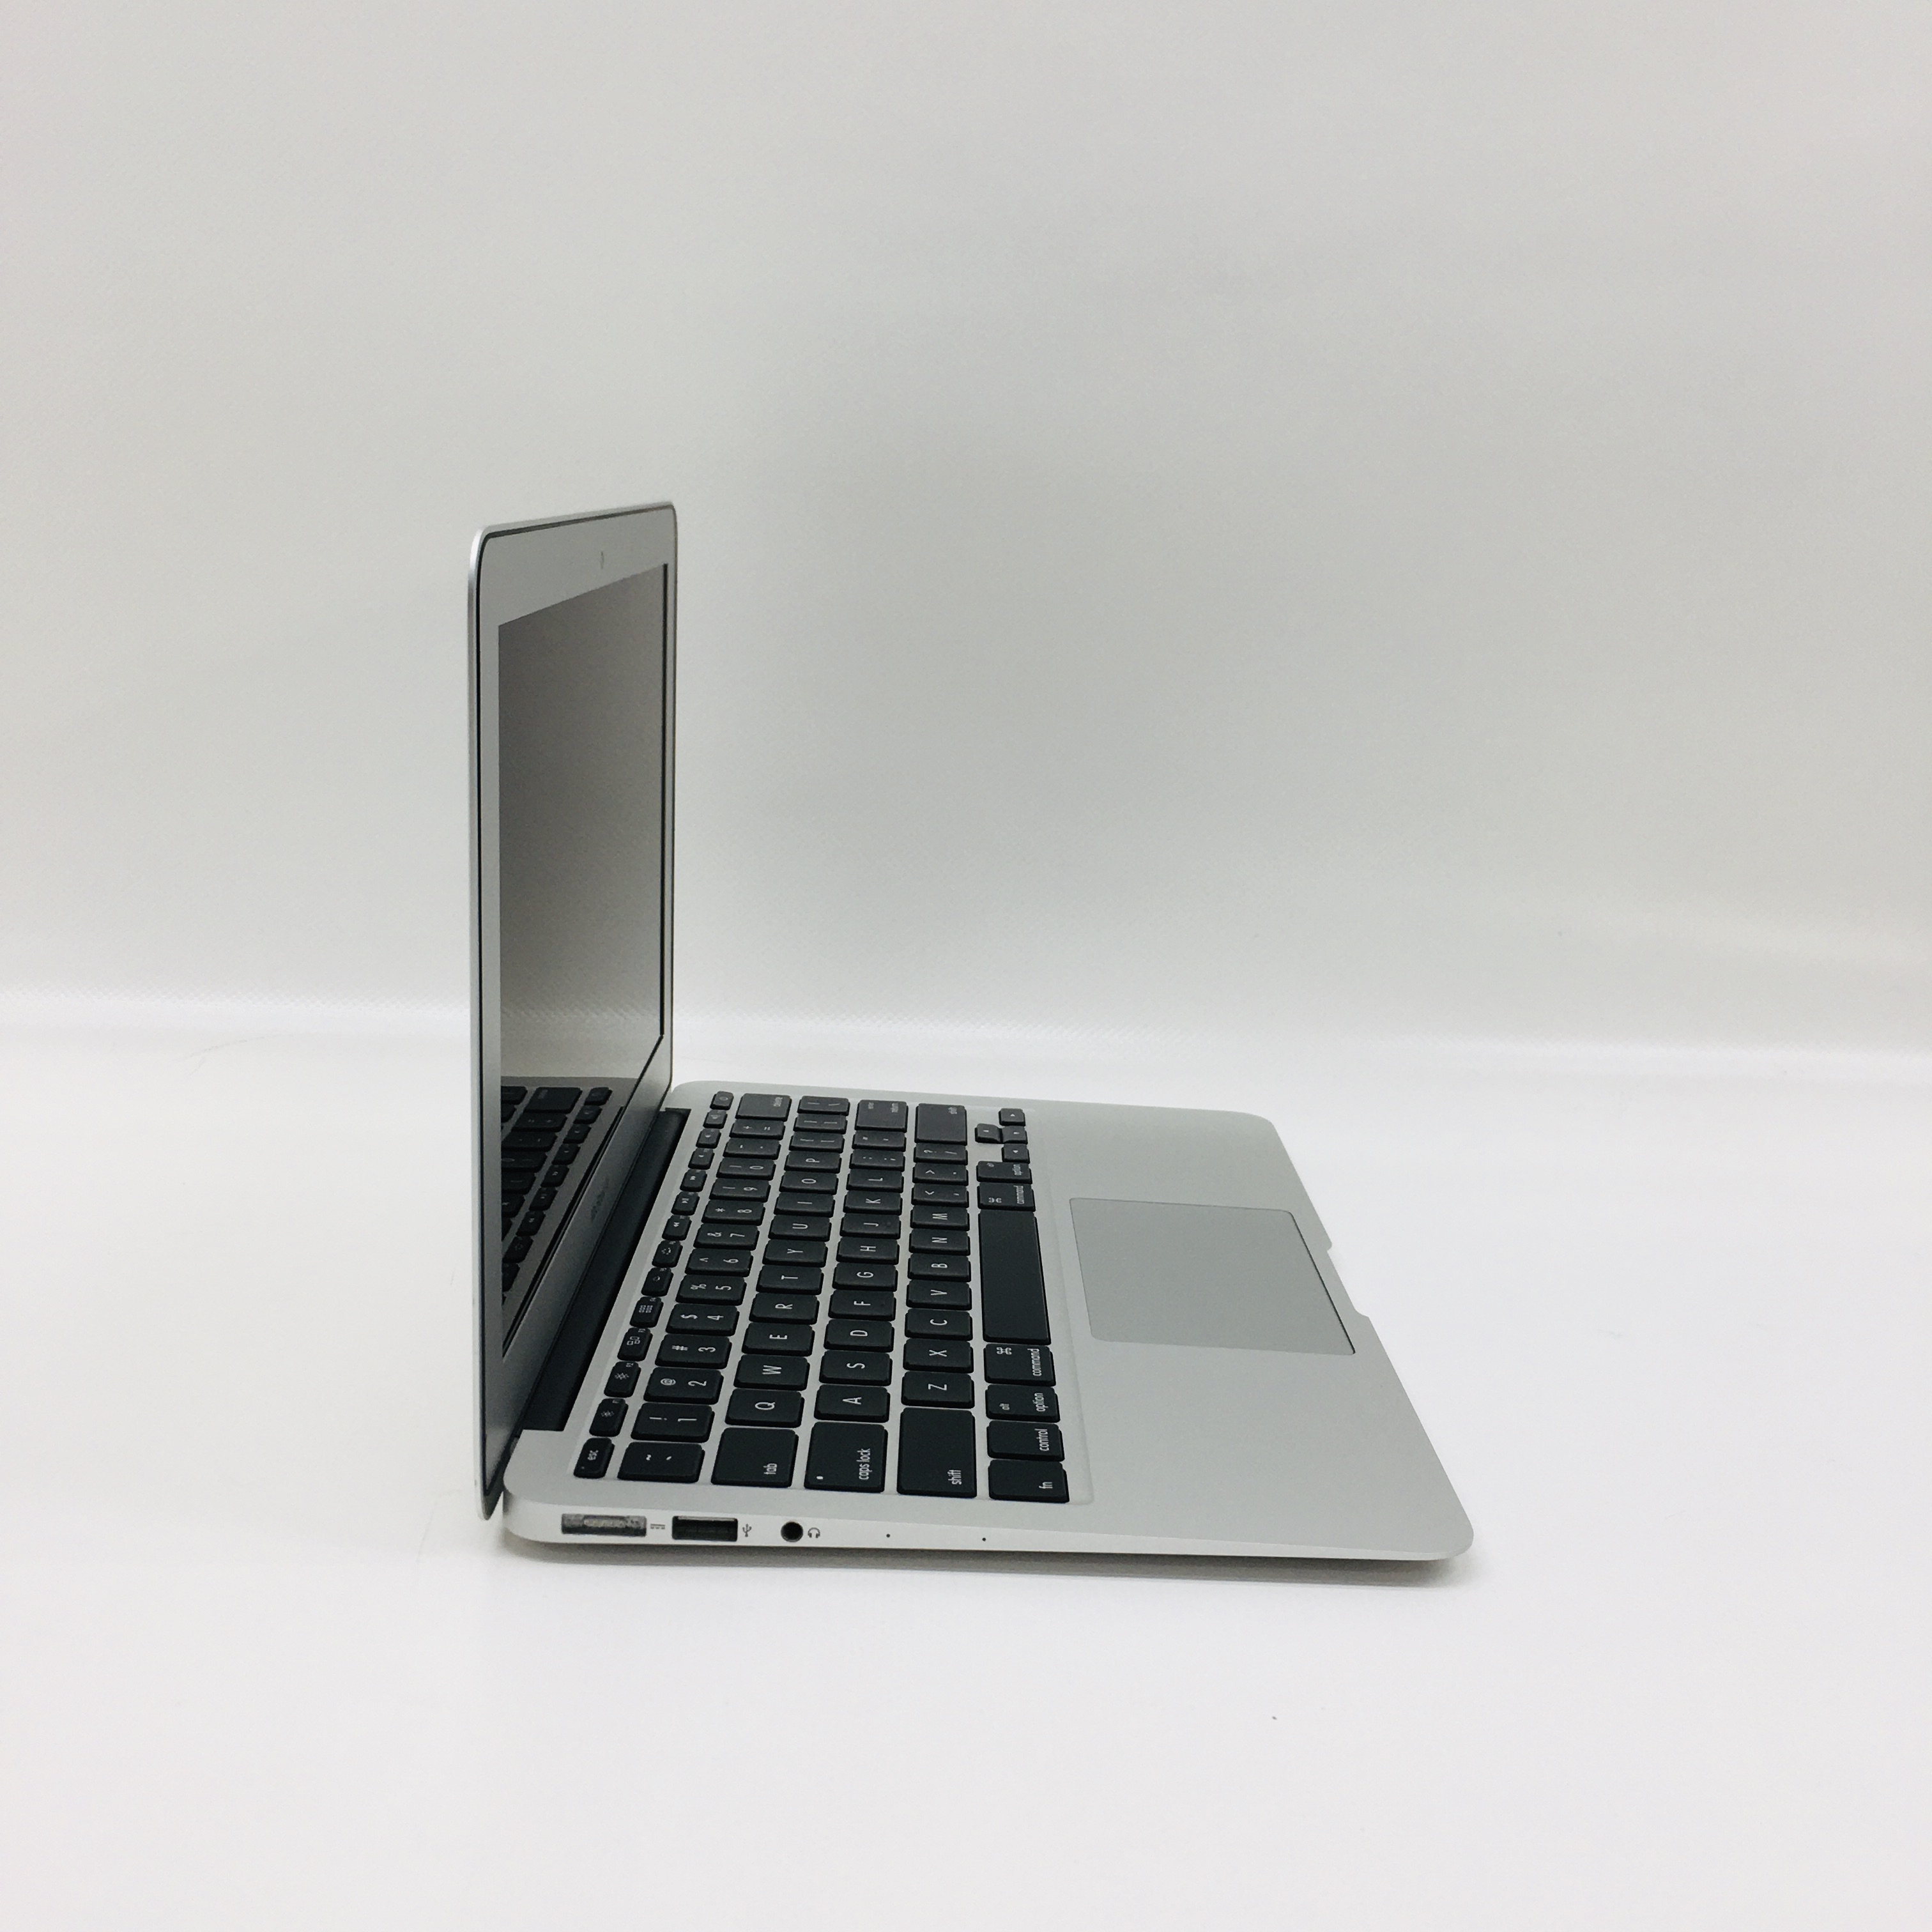 MacBook Air 11" Early 2015 (Intel Core i5 1.6 GHz 4 GB RAM 128 GB SSD), Intel Core i5 1.6 GHz, 4 GB RAM, 128 GB SSD, image 2